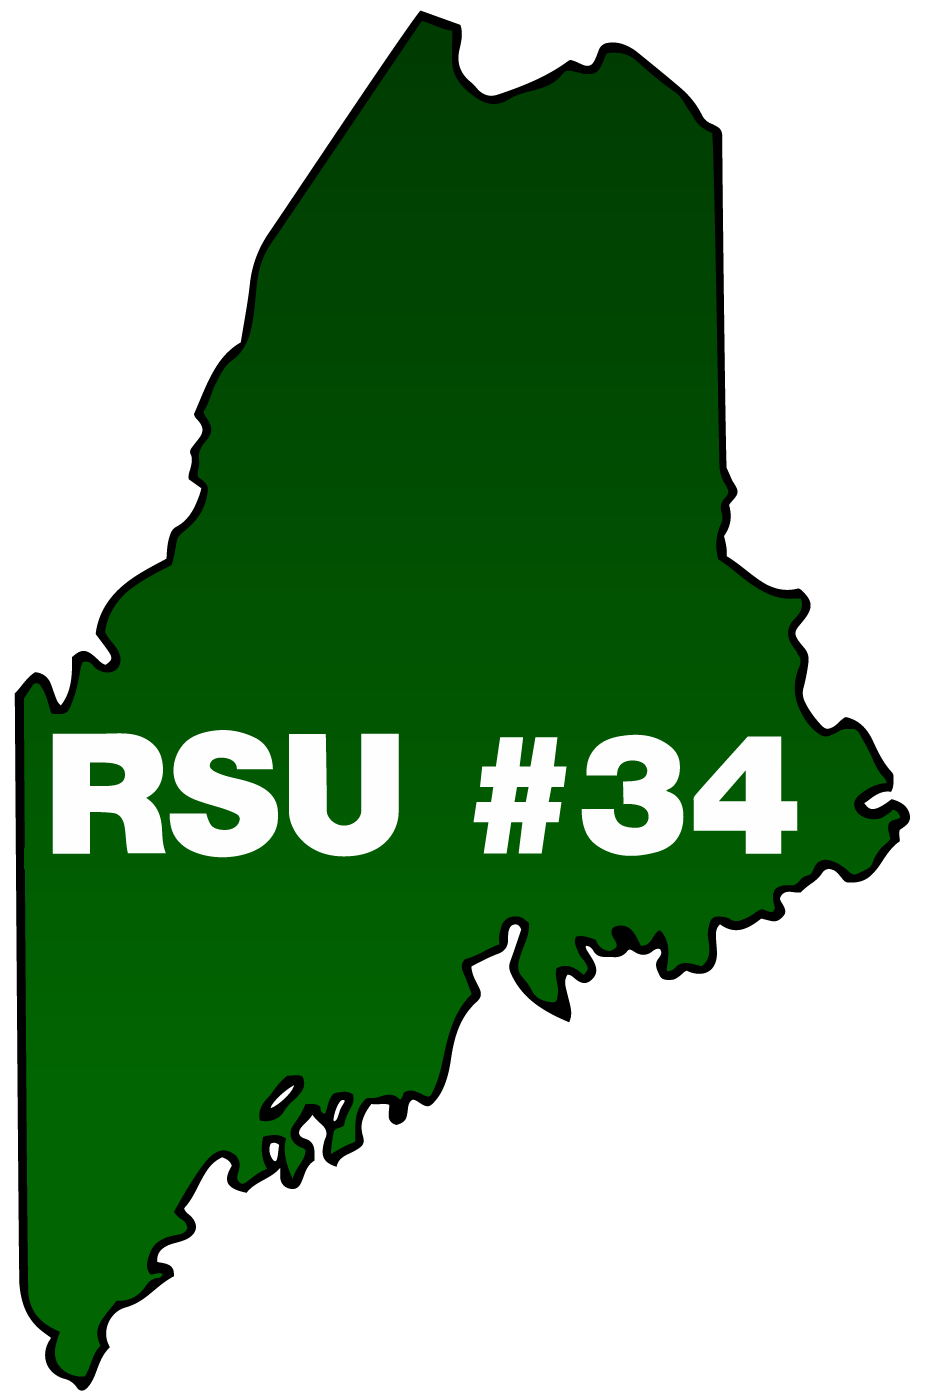 RSU 34 logo